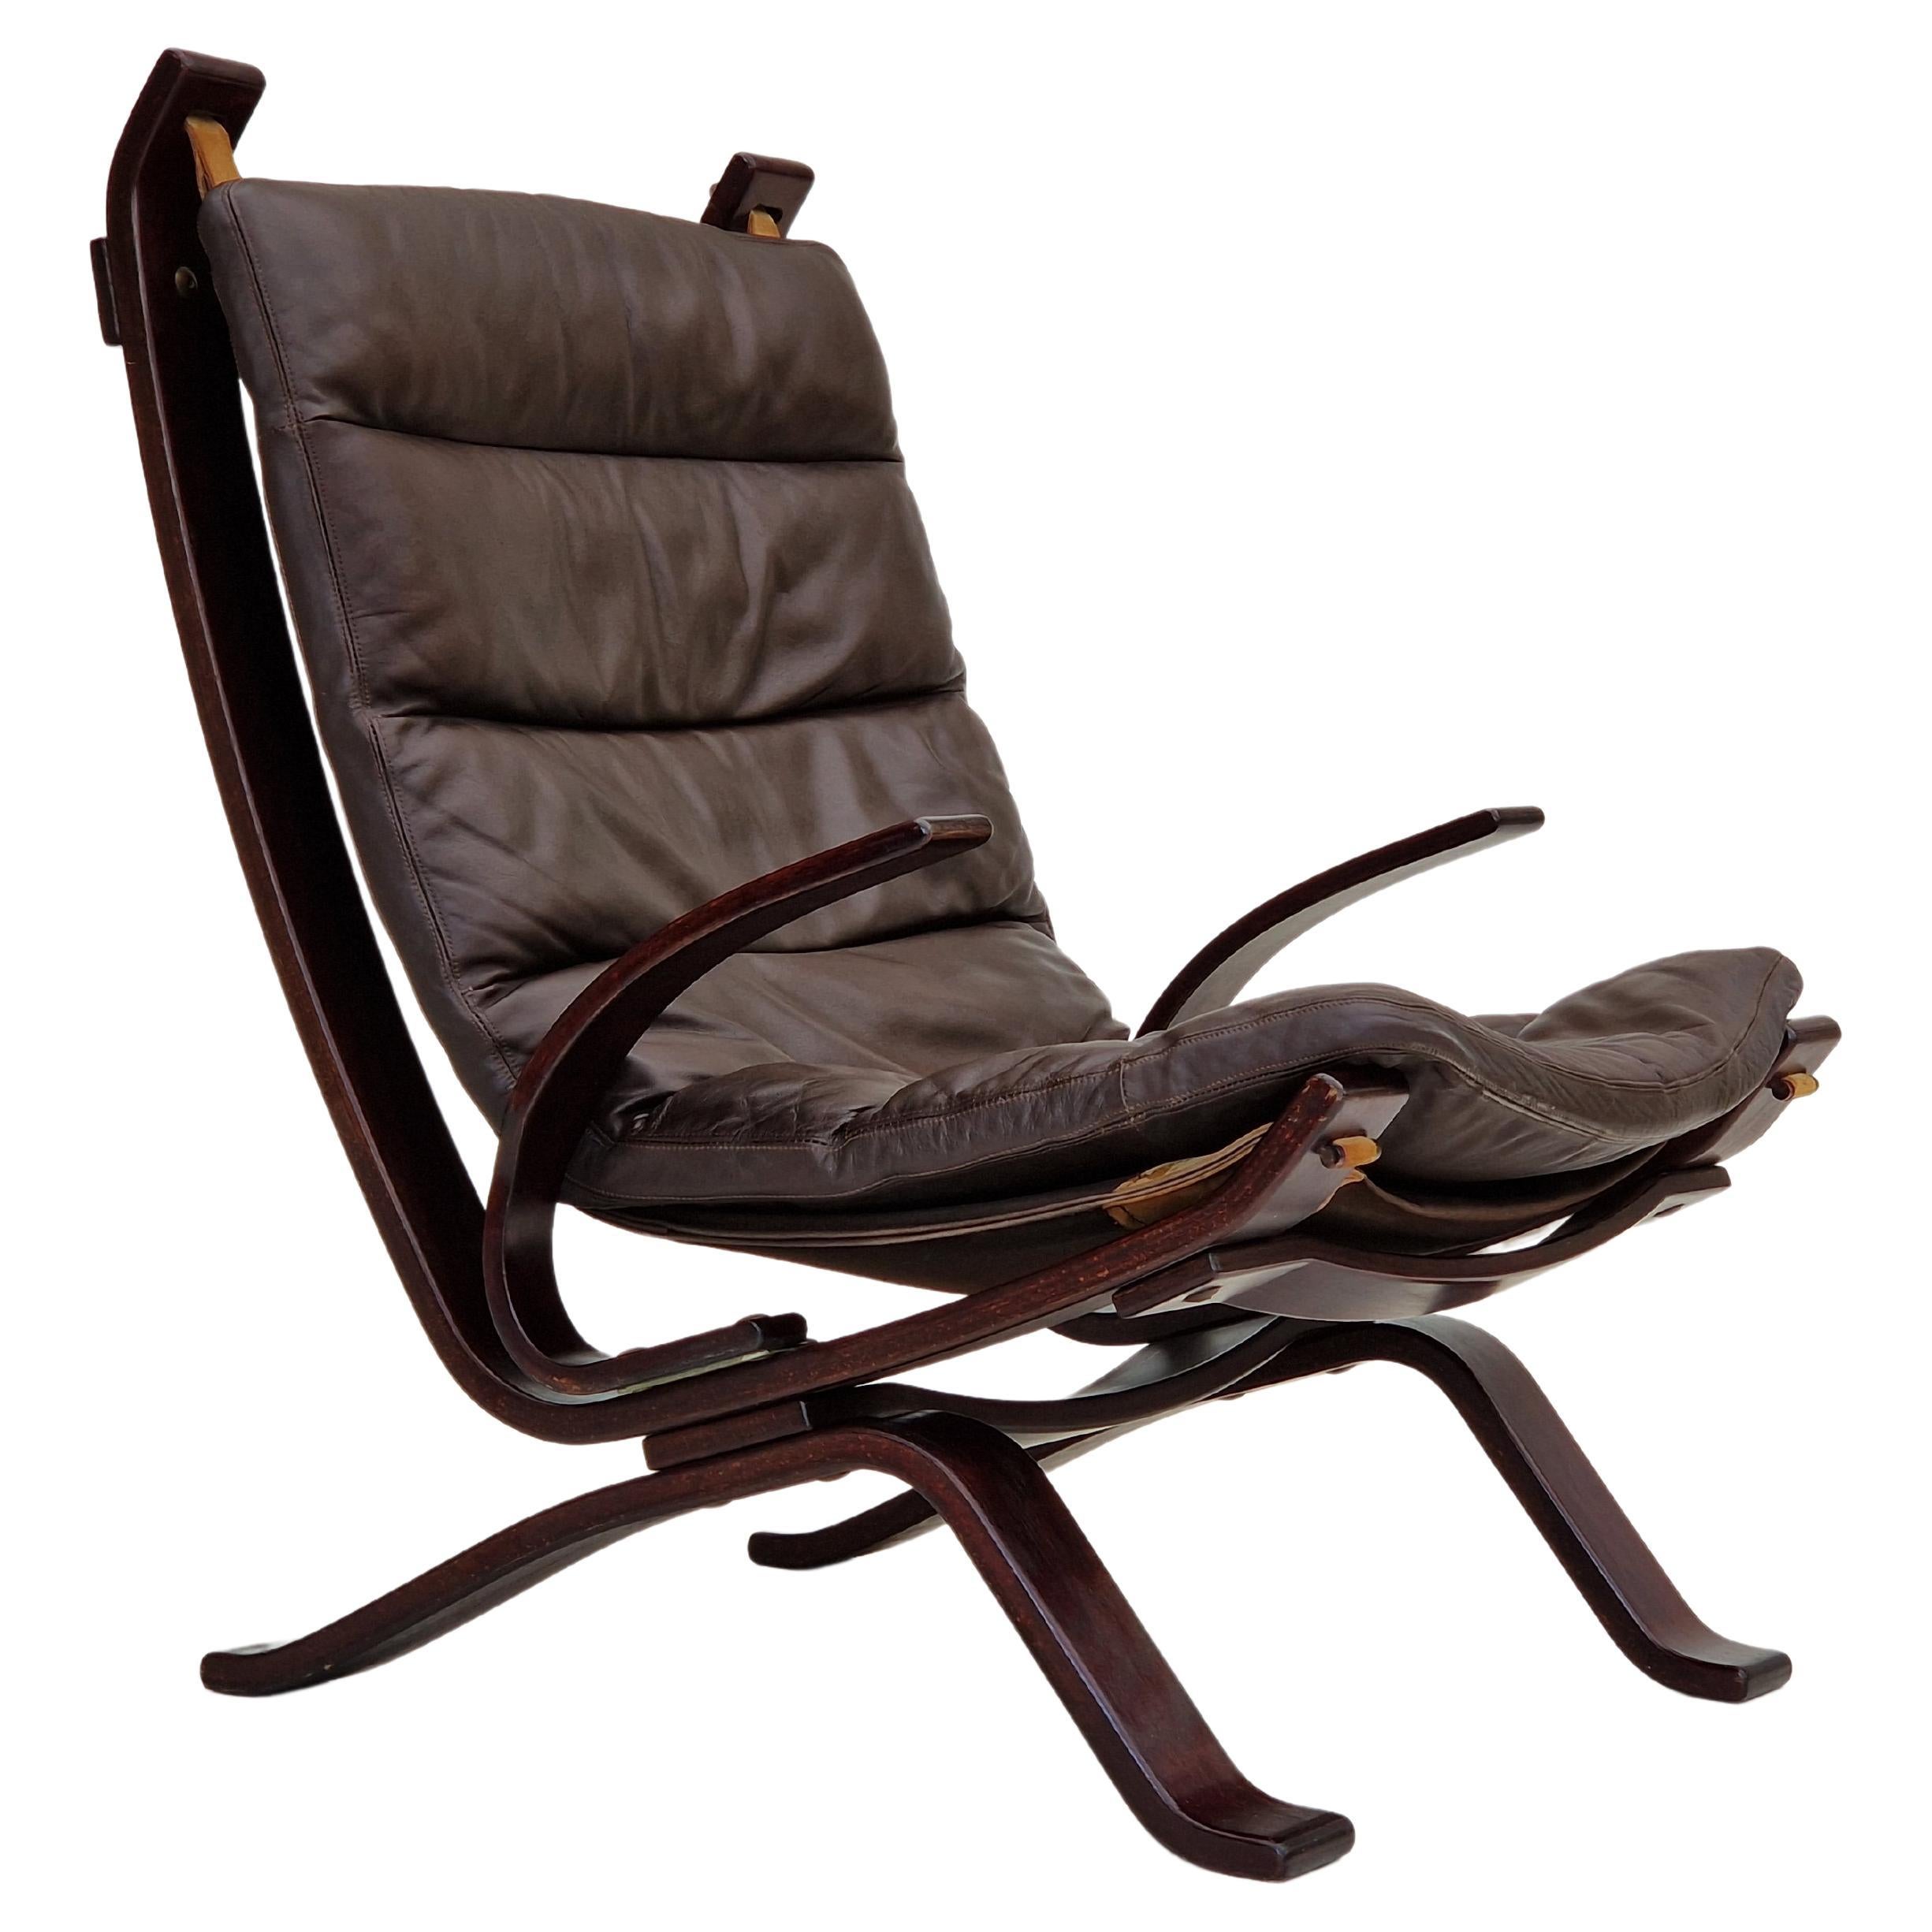 1970s, Danish design by Brammin Møbler, "Focus" lounge chair, original very good